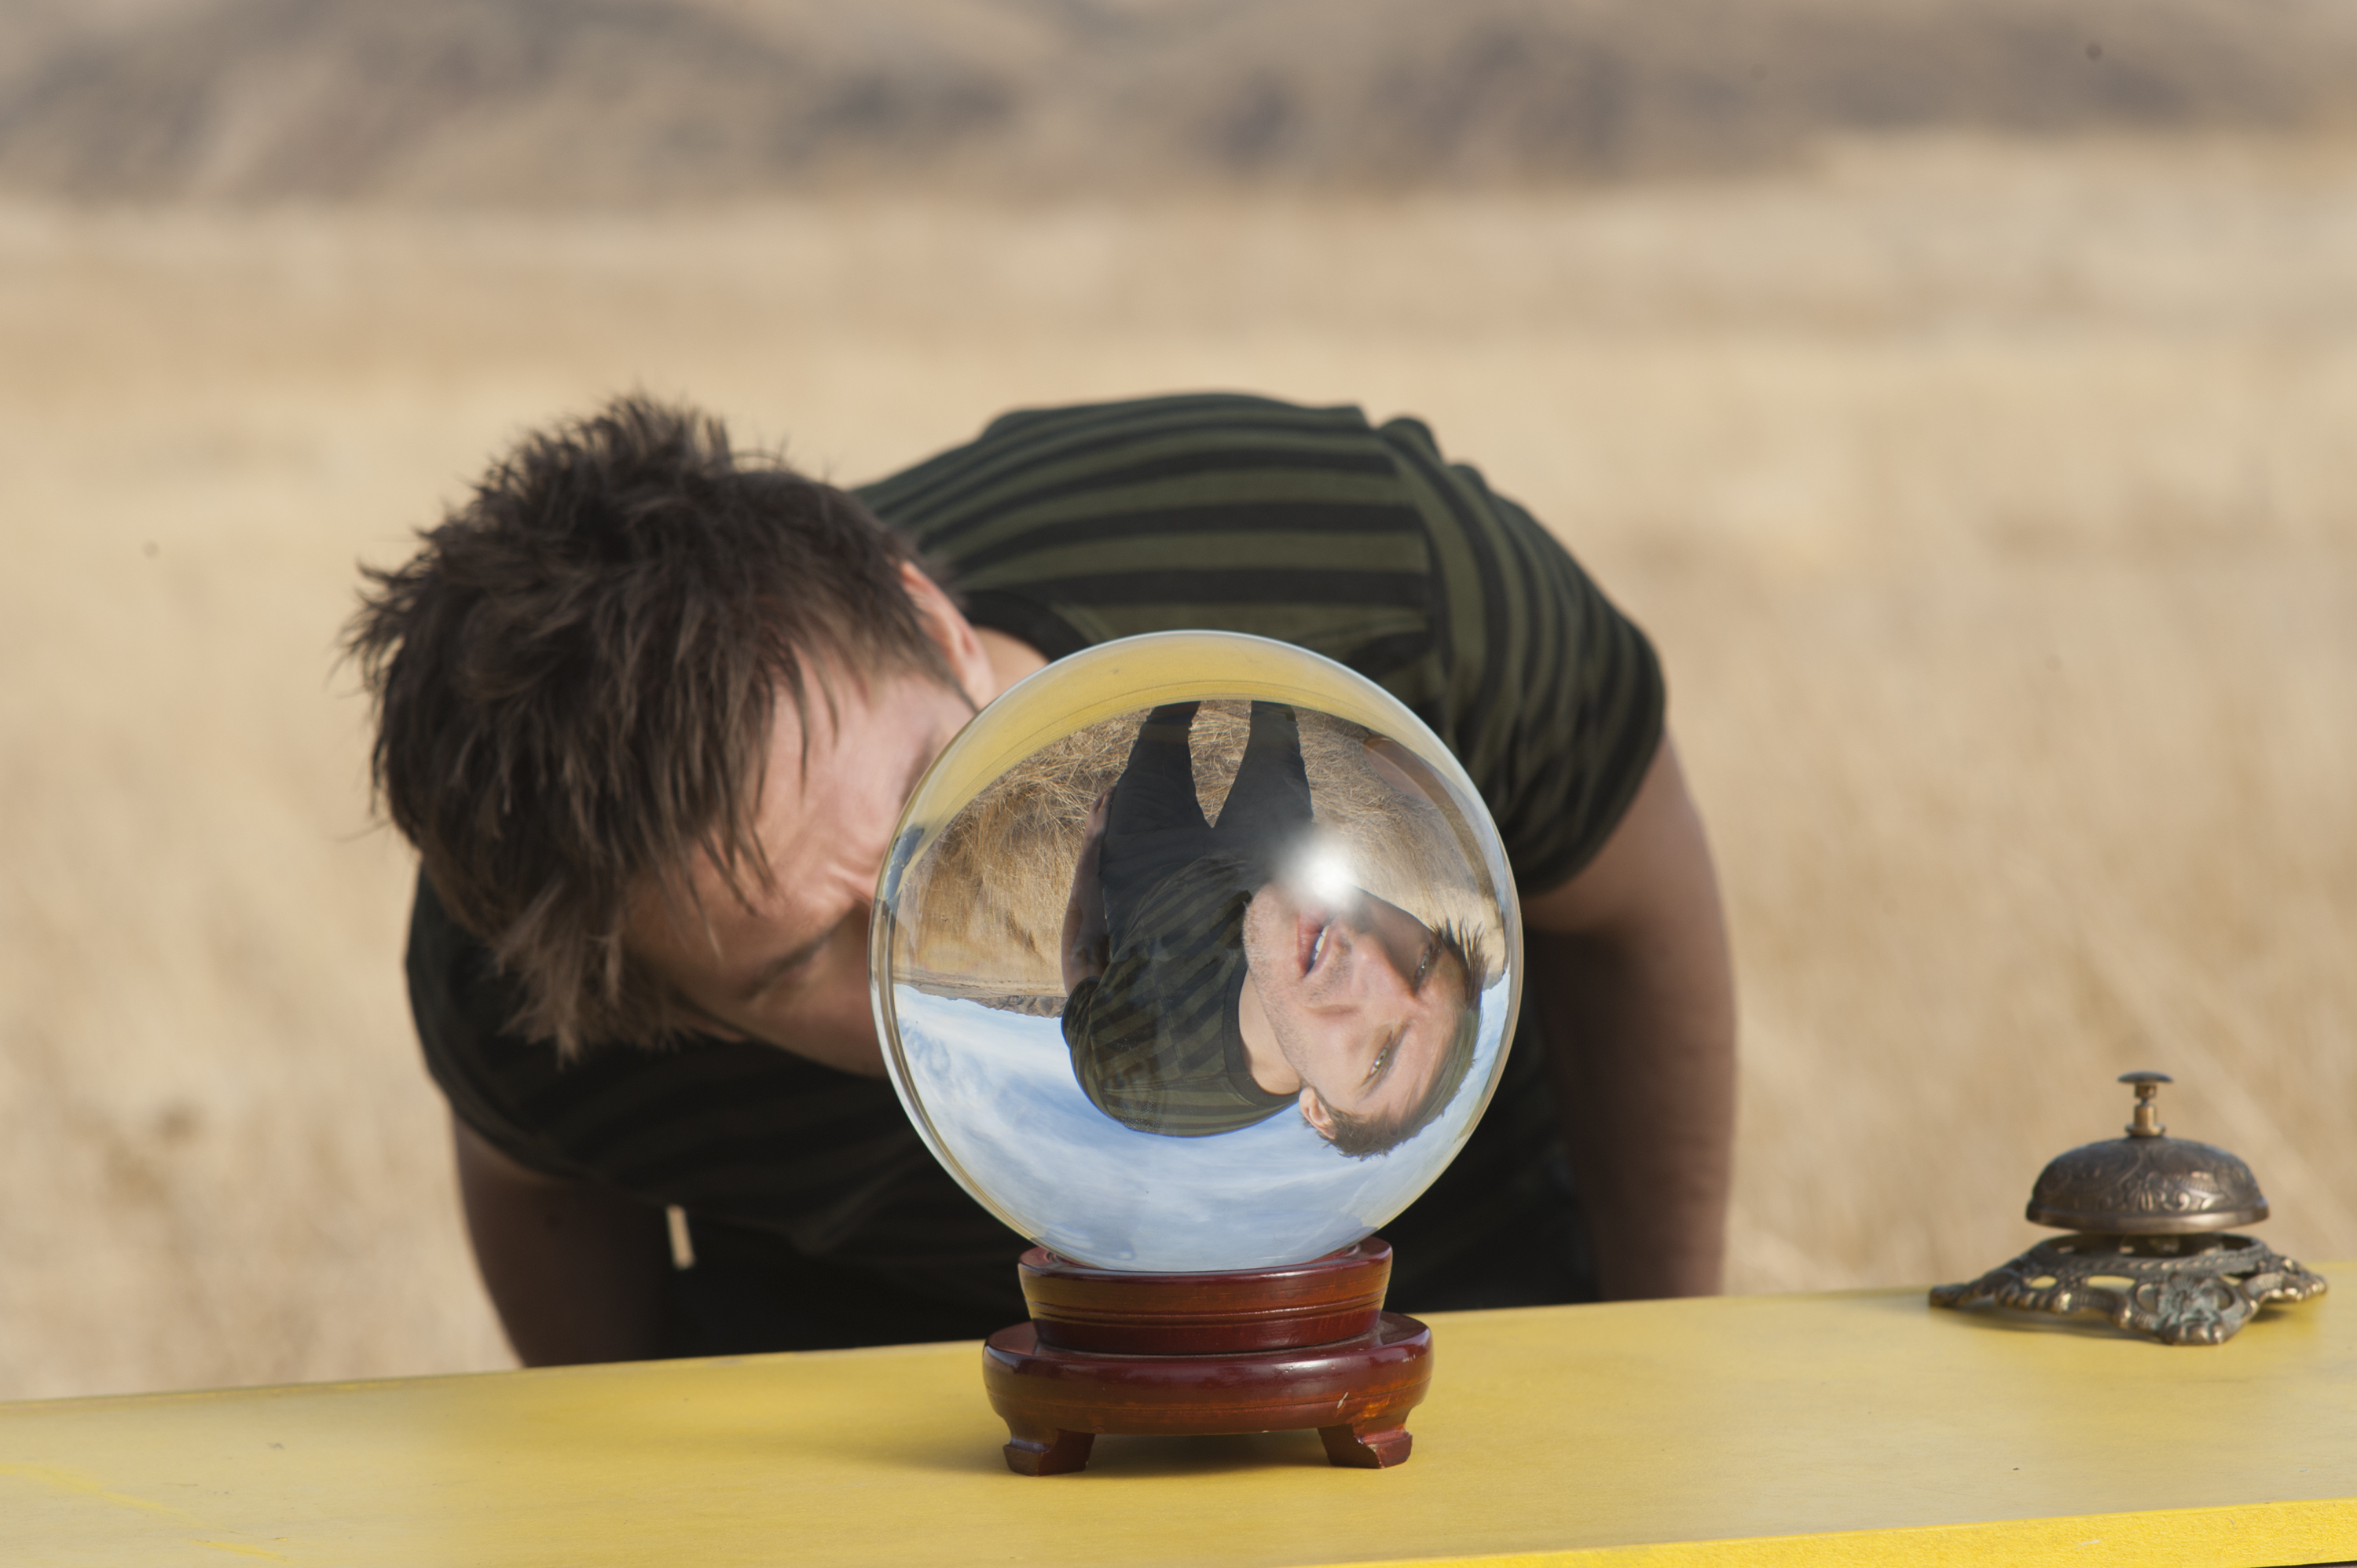 Dan Stevens peers into a crystal ball, as another Dan Stevens peers back at another angle, in Legion.